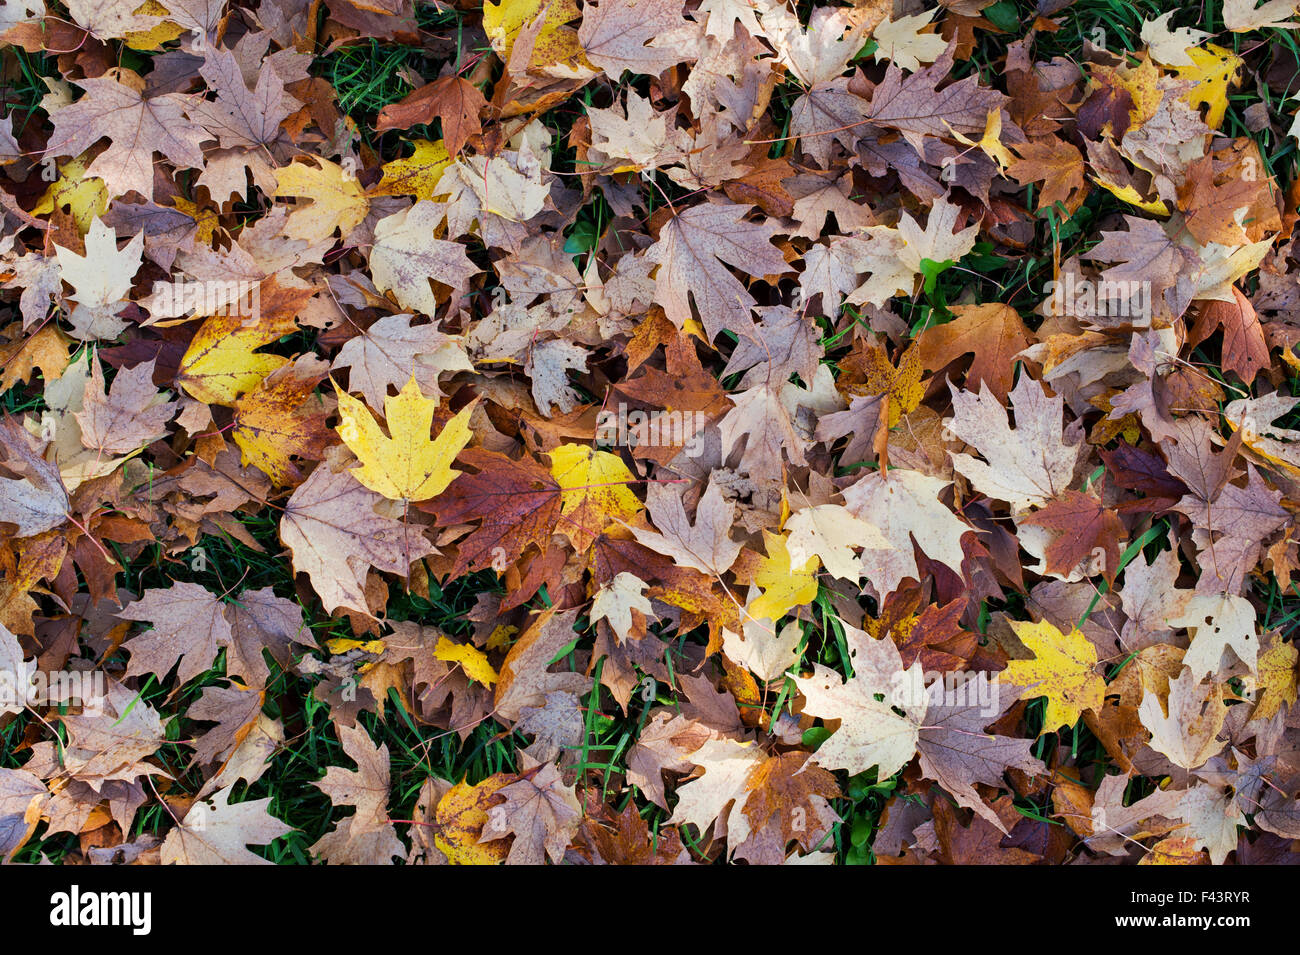 Acer Saccharum Nigrum. Fallen Black Maple tree leaves in autumn on the ground Stock Photo